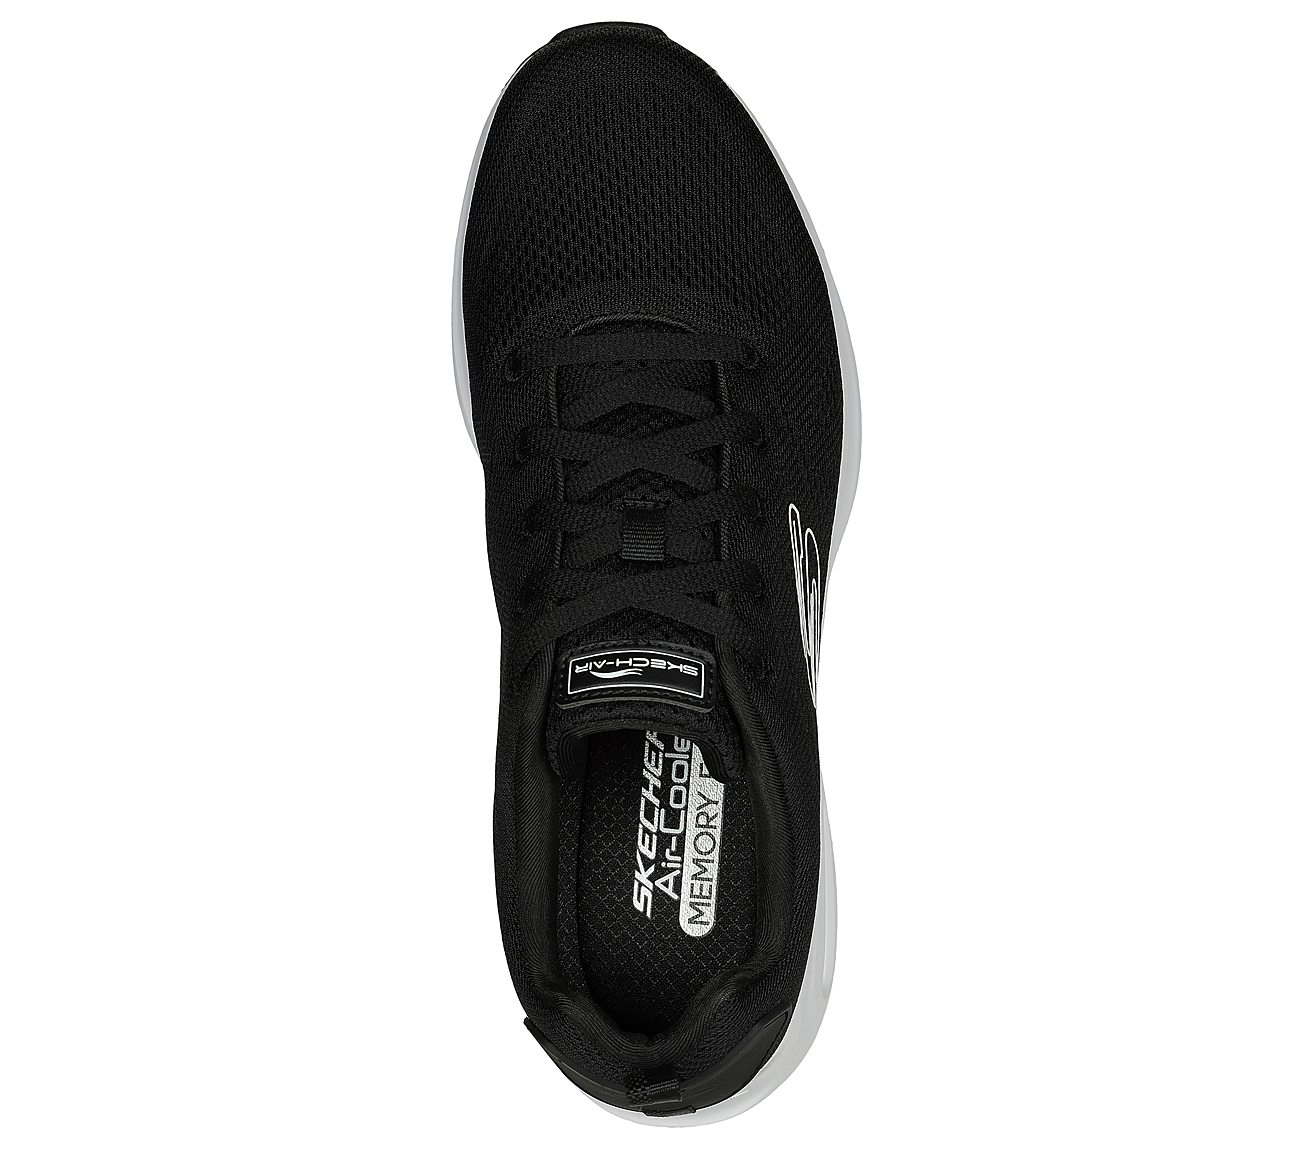 SKECH-AIR COURT, BLACK/WHITE Footwear Top View